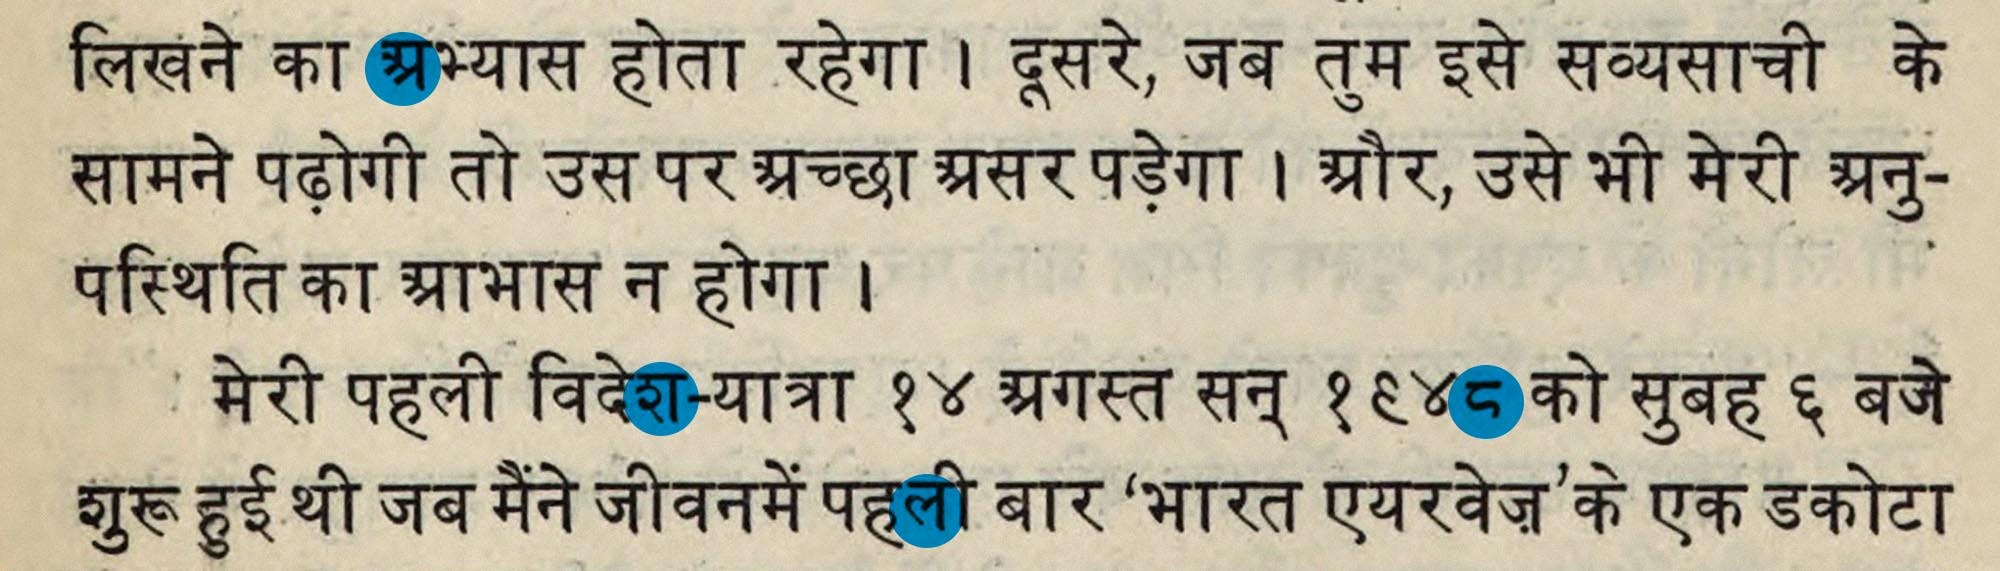 Hindi text from c. 1954